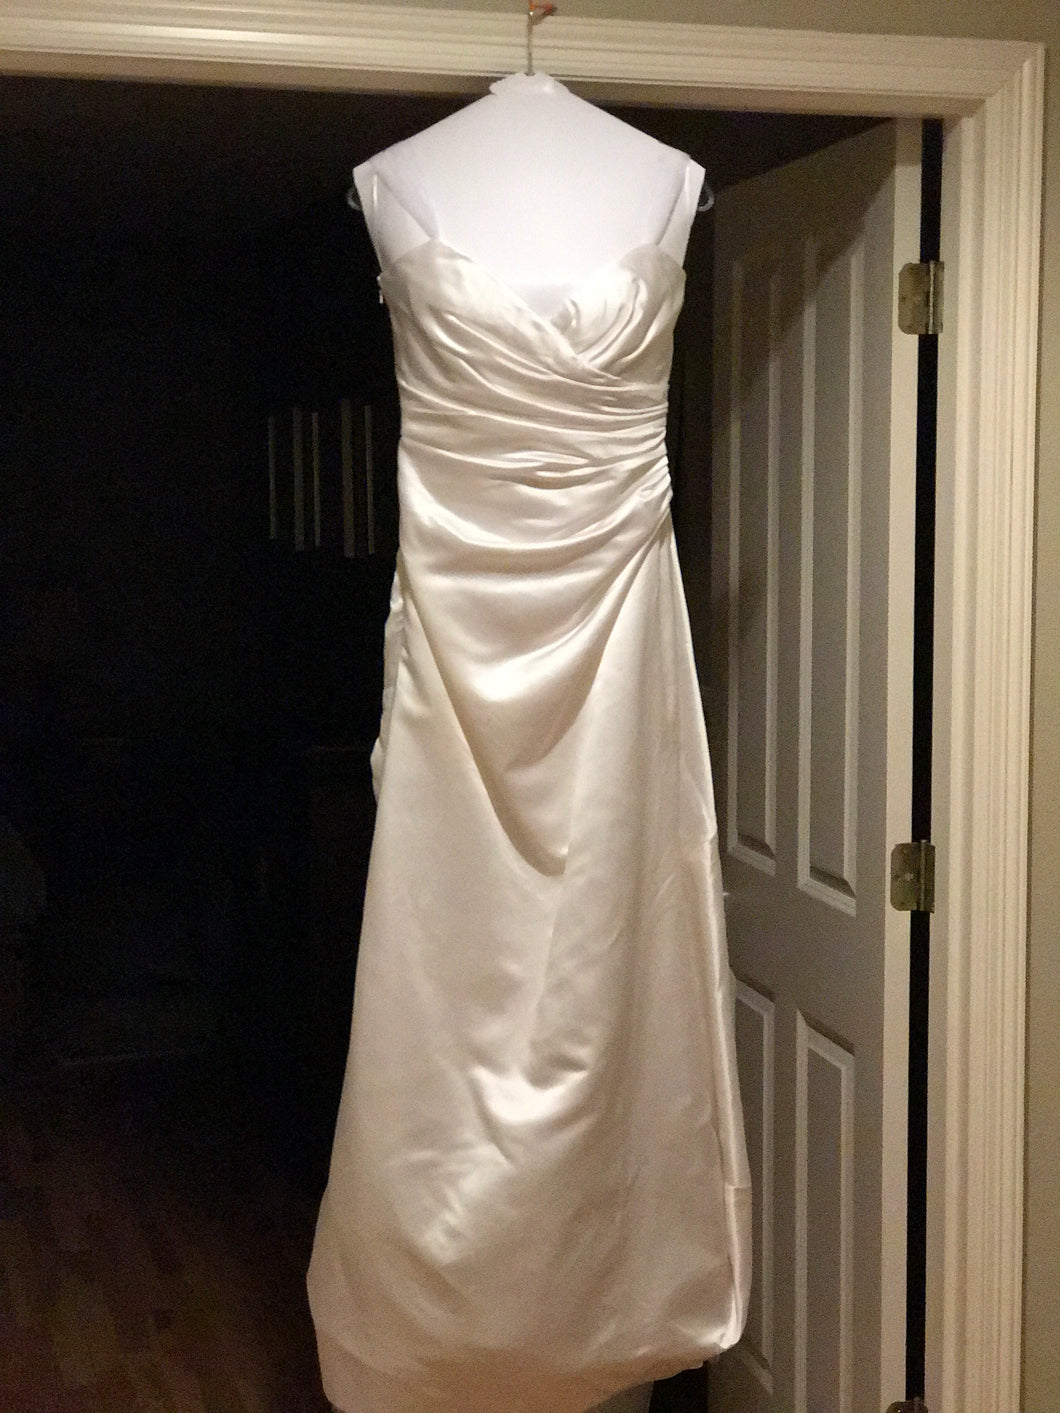 Vera Wang 'VWG-2G155' size 4 used wedding dress front view on hanger